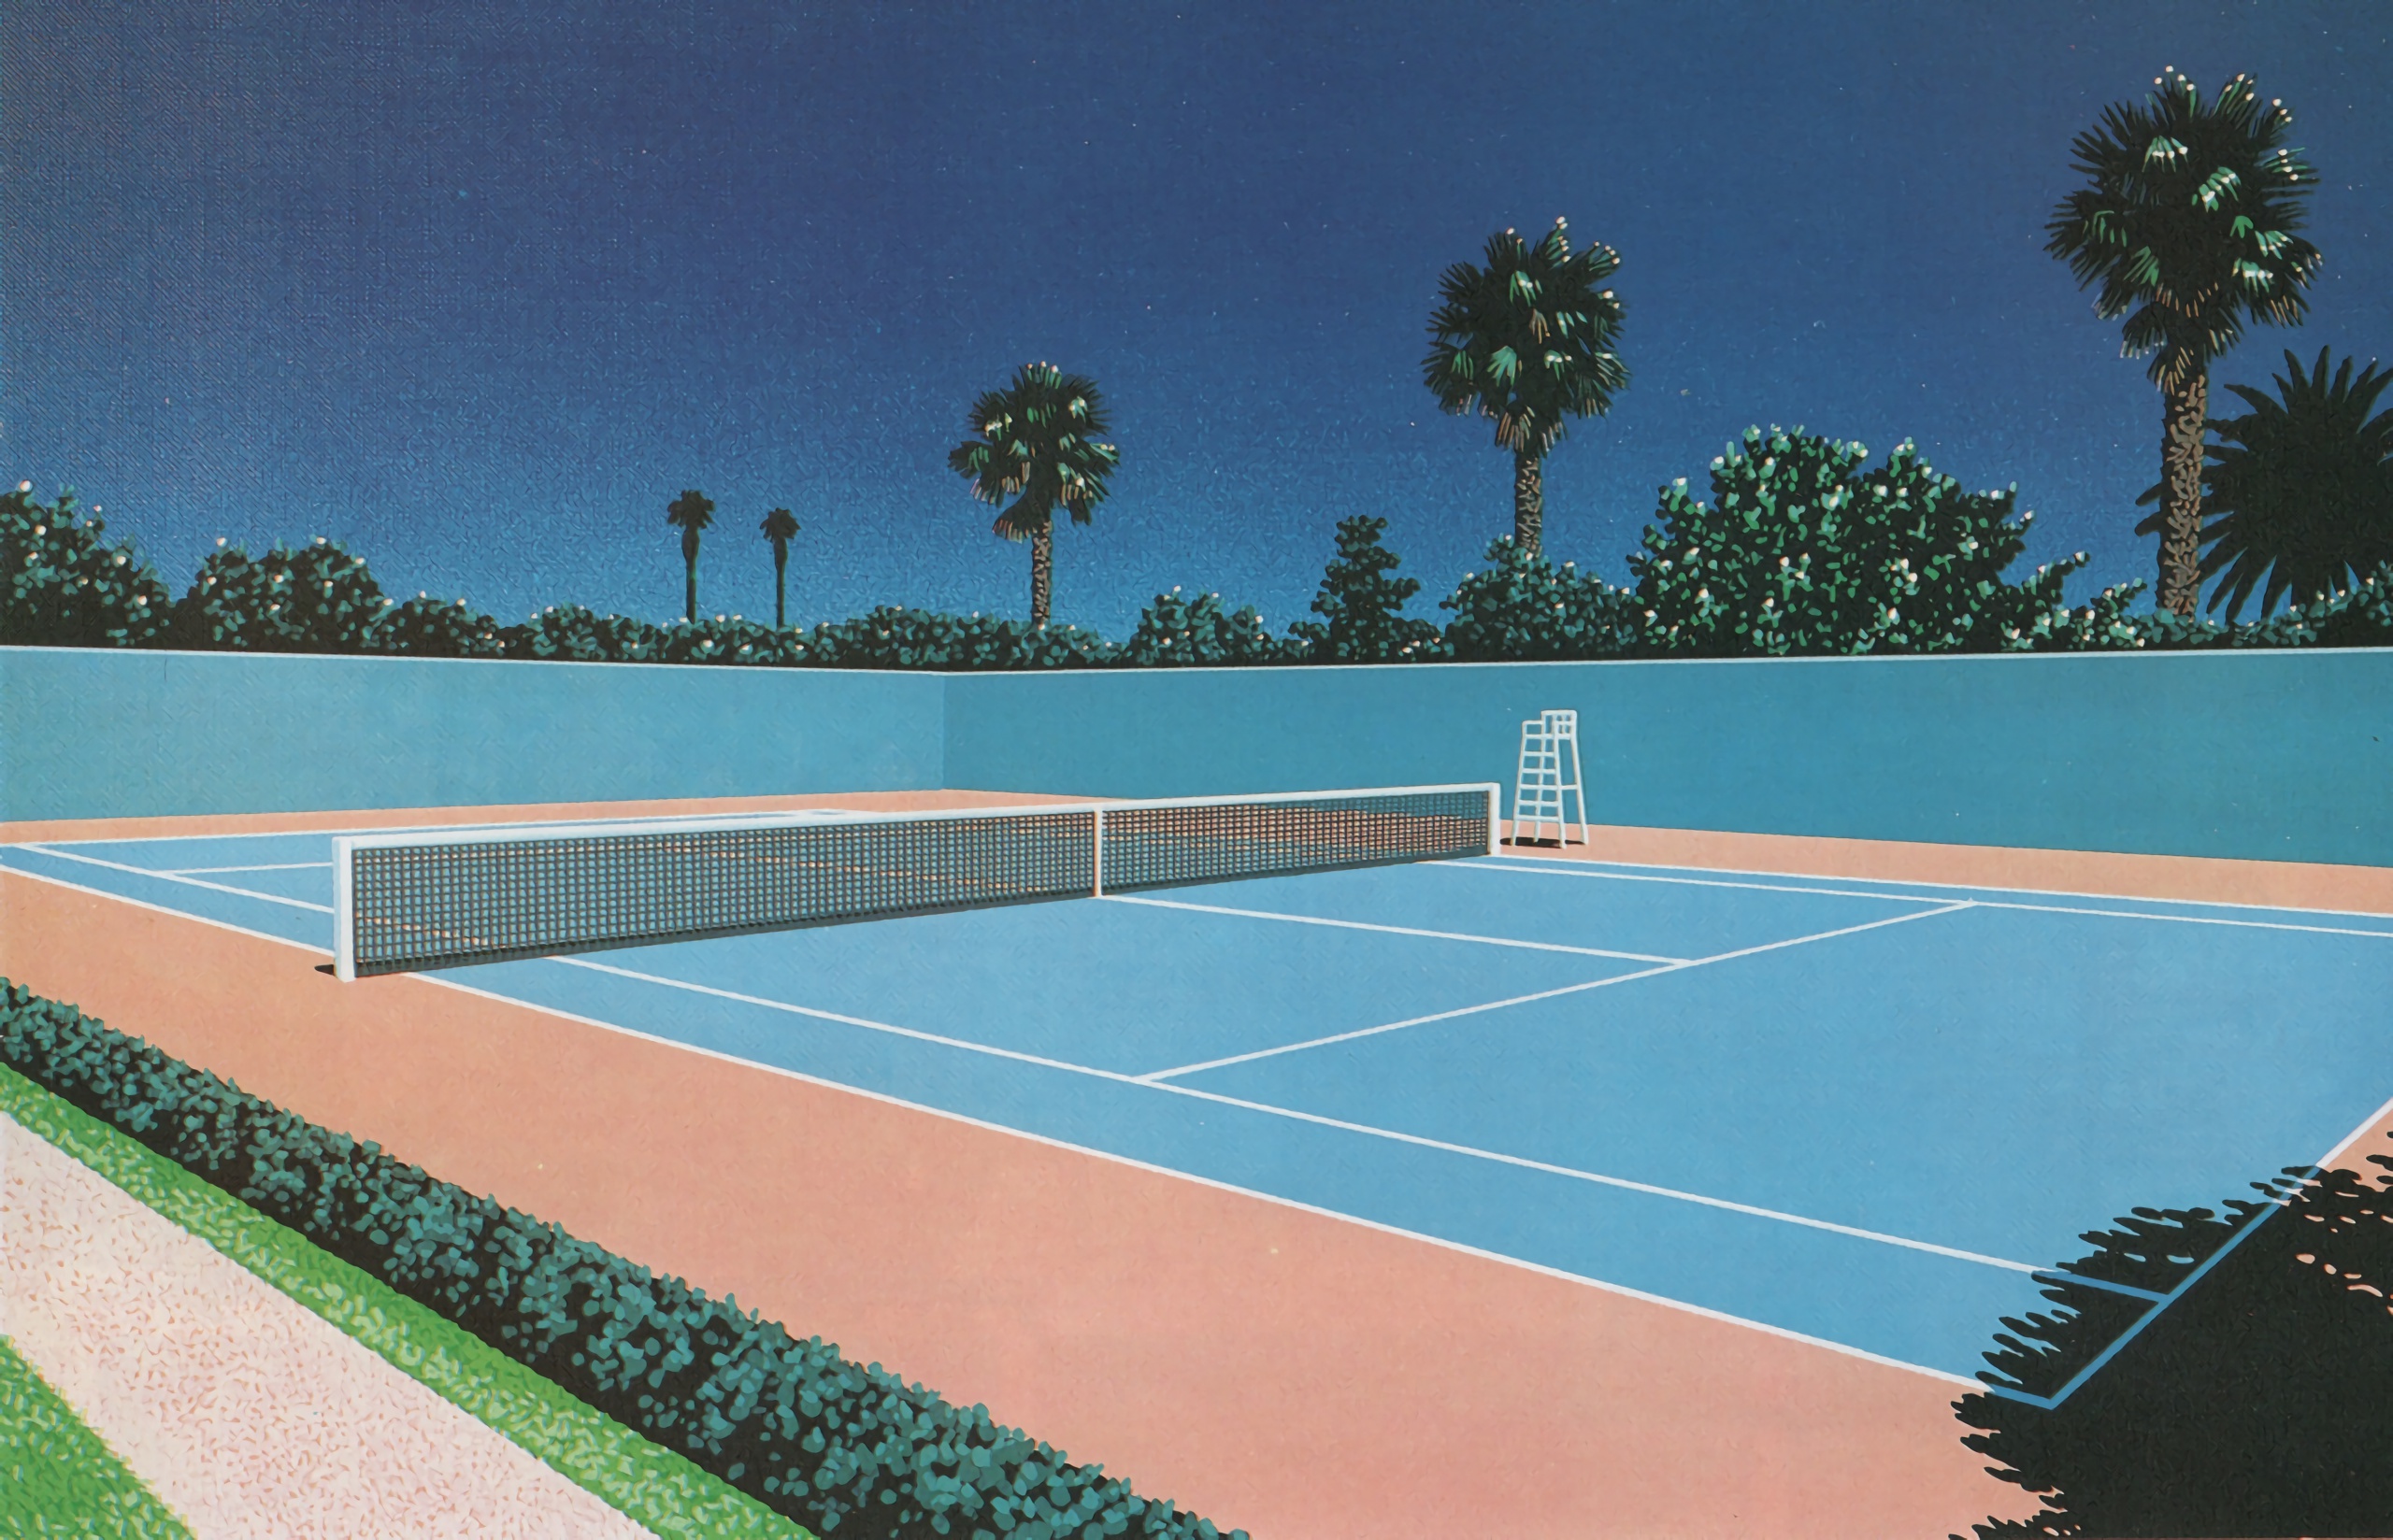 General 2560x1648 painting retrowave 1980s tennis court